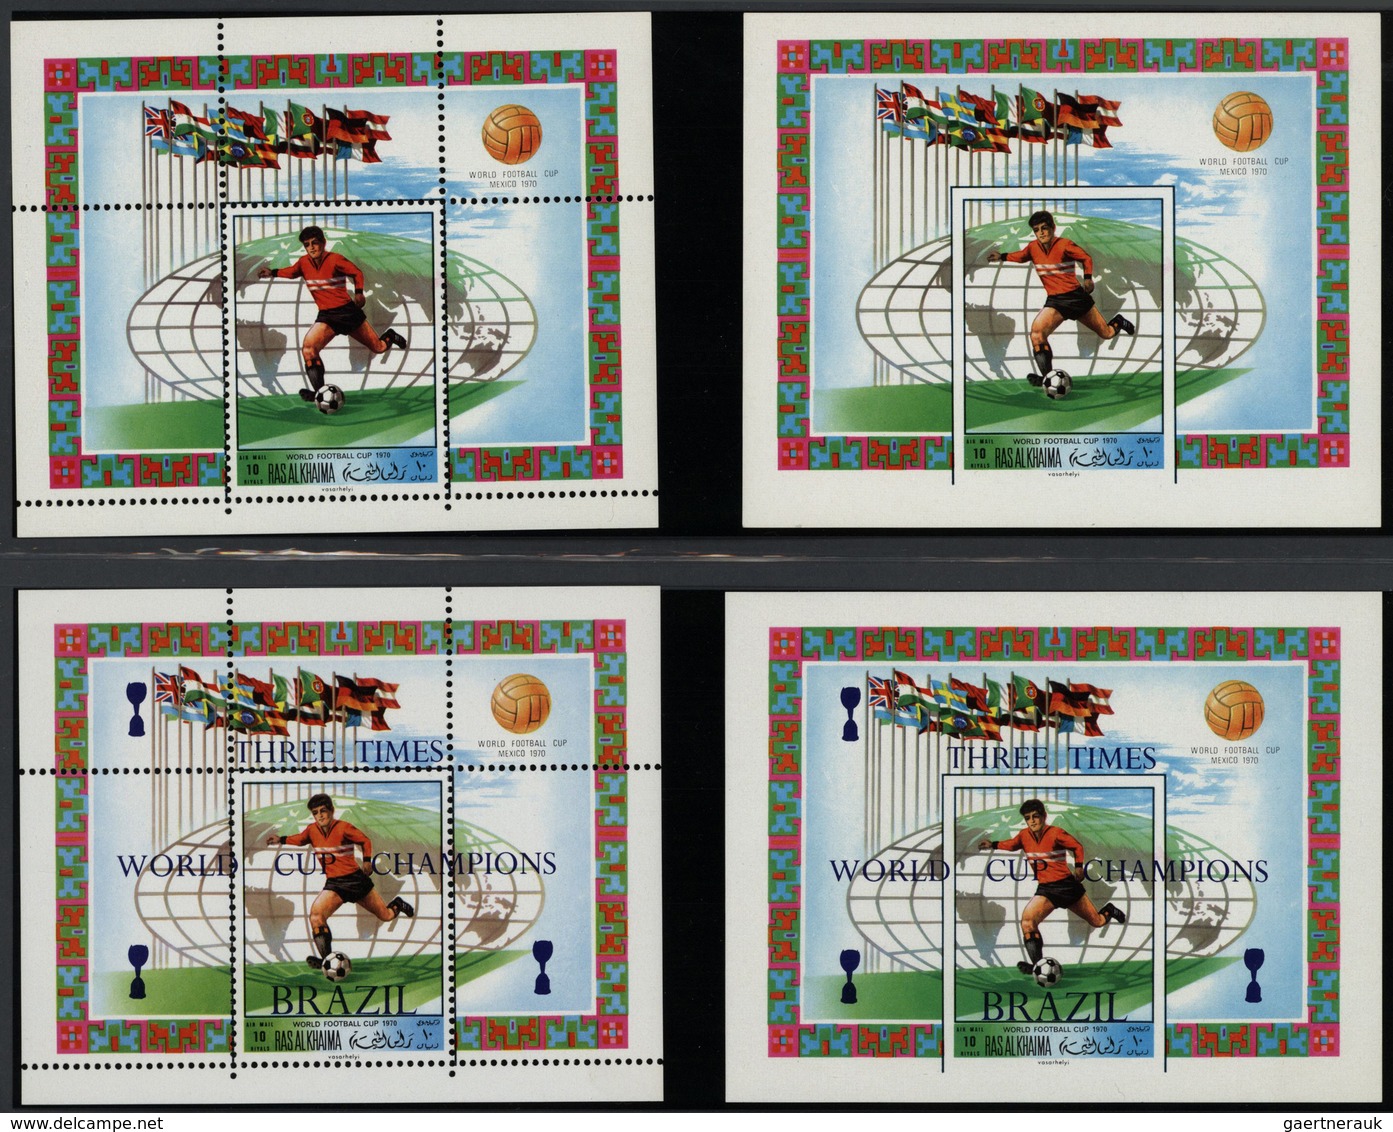 23900 Ras al Khaima: 1970, Football World Championship/Olympic Games, u/m collection incl. se-tenant gutte